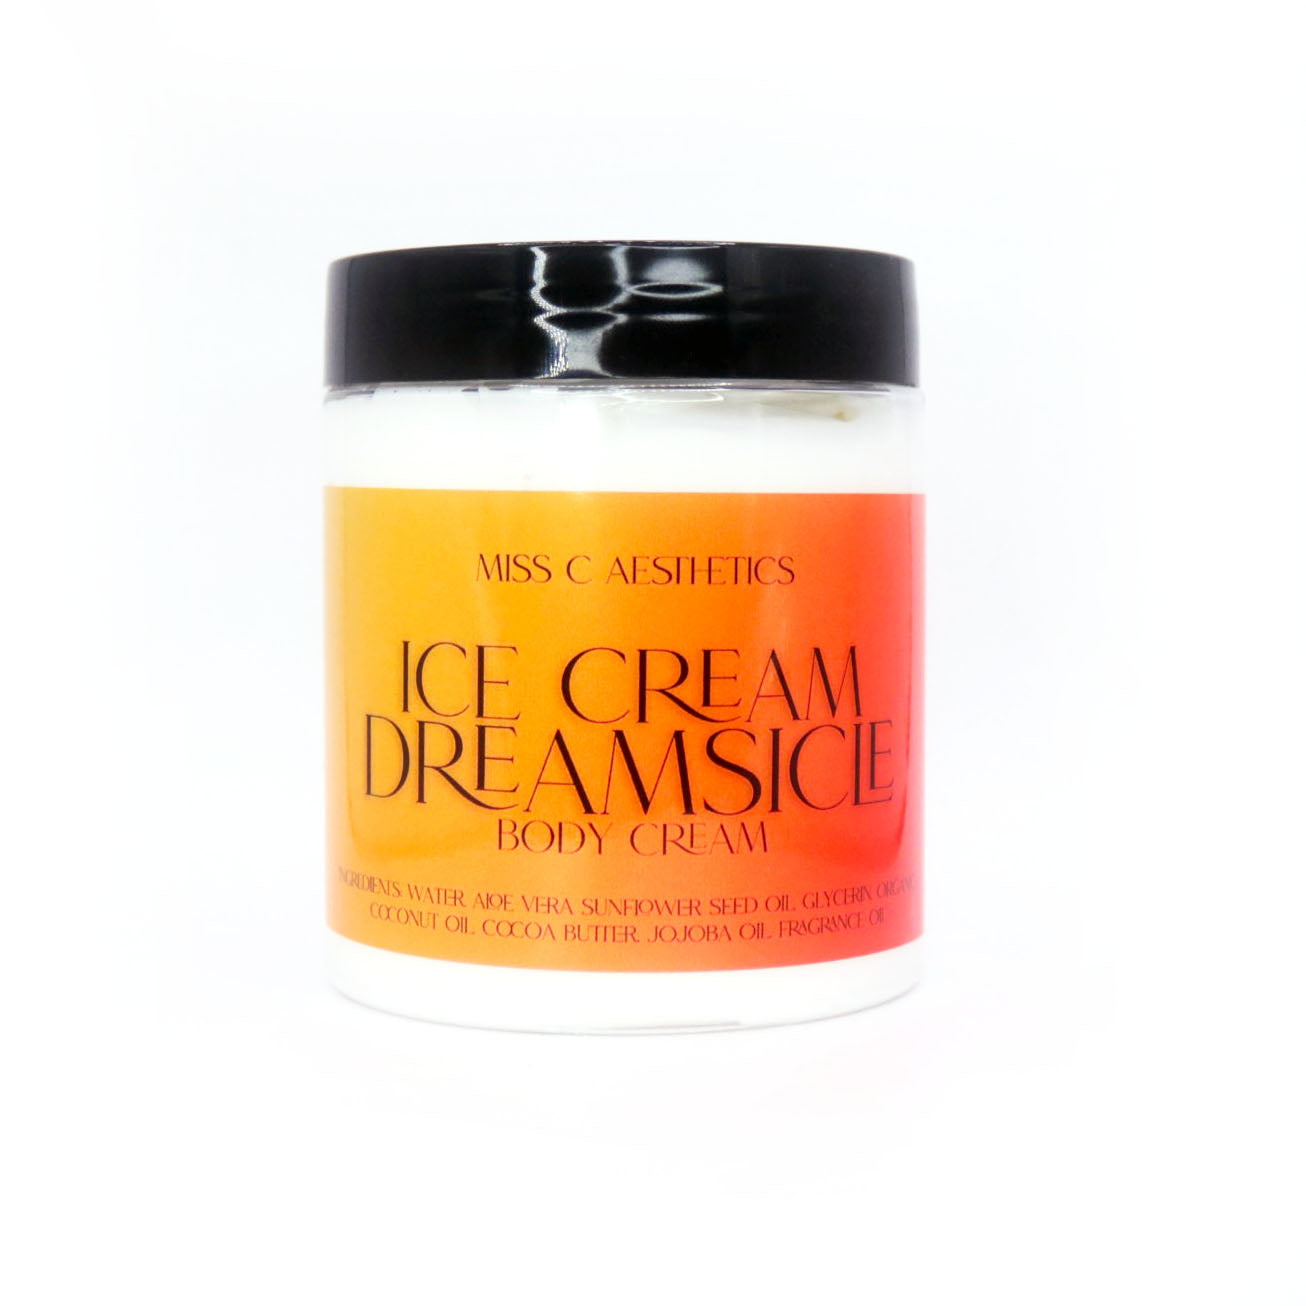 "Ice Cream Dreamsicle" Whipped Body Cream